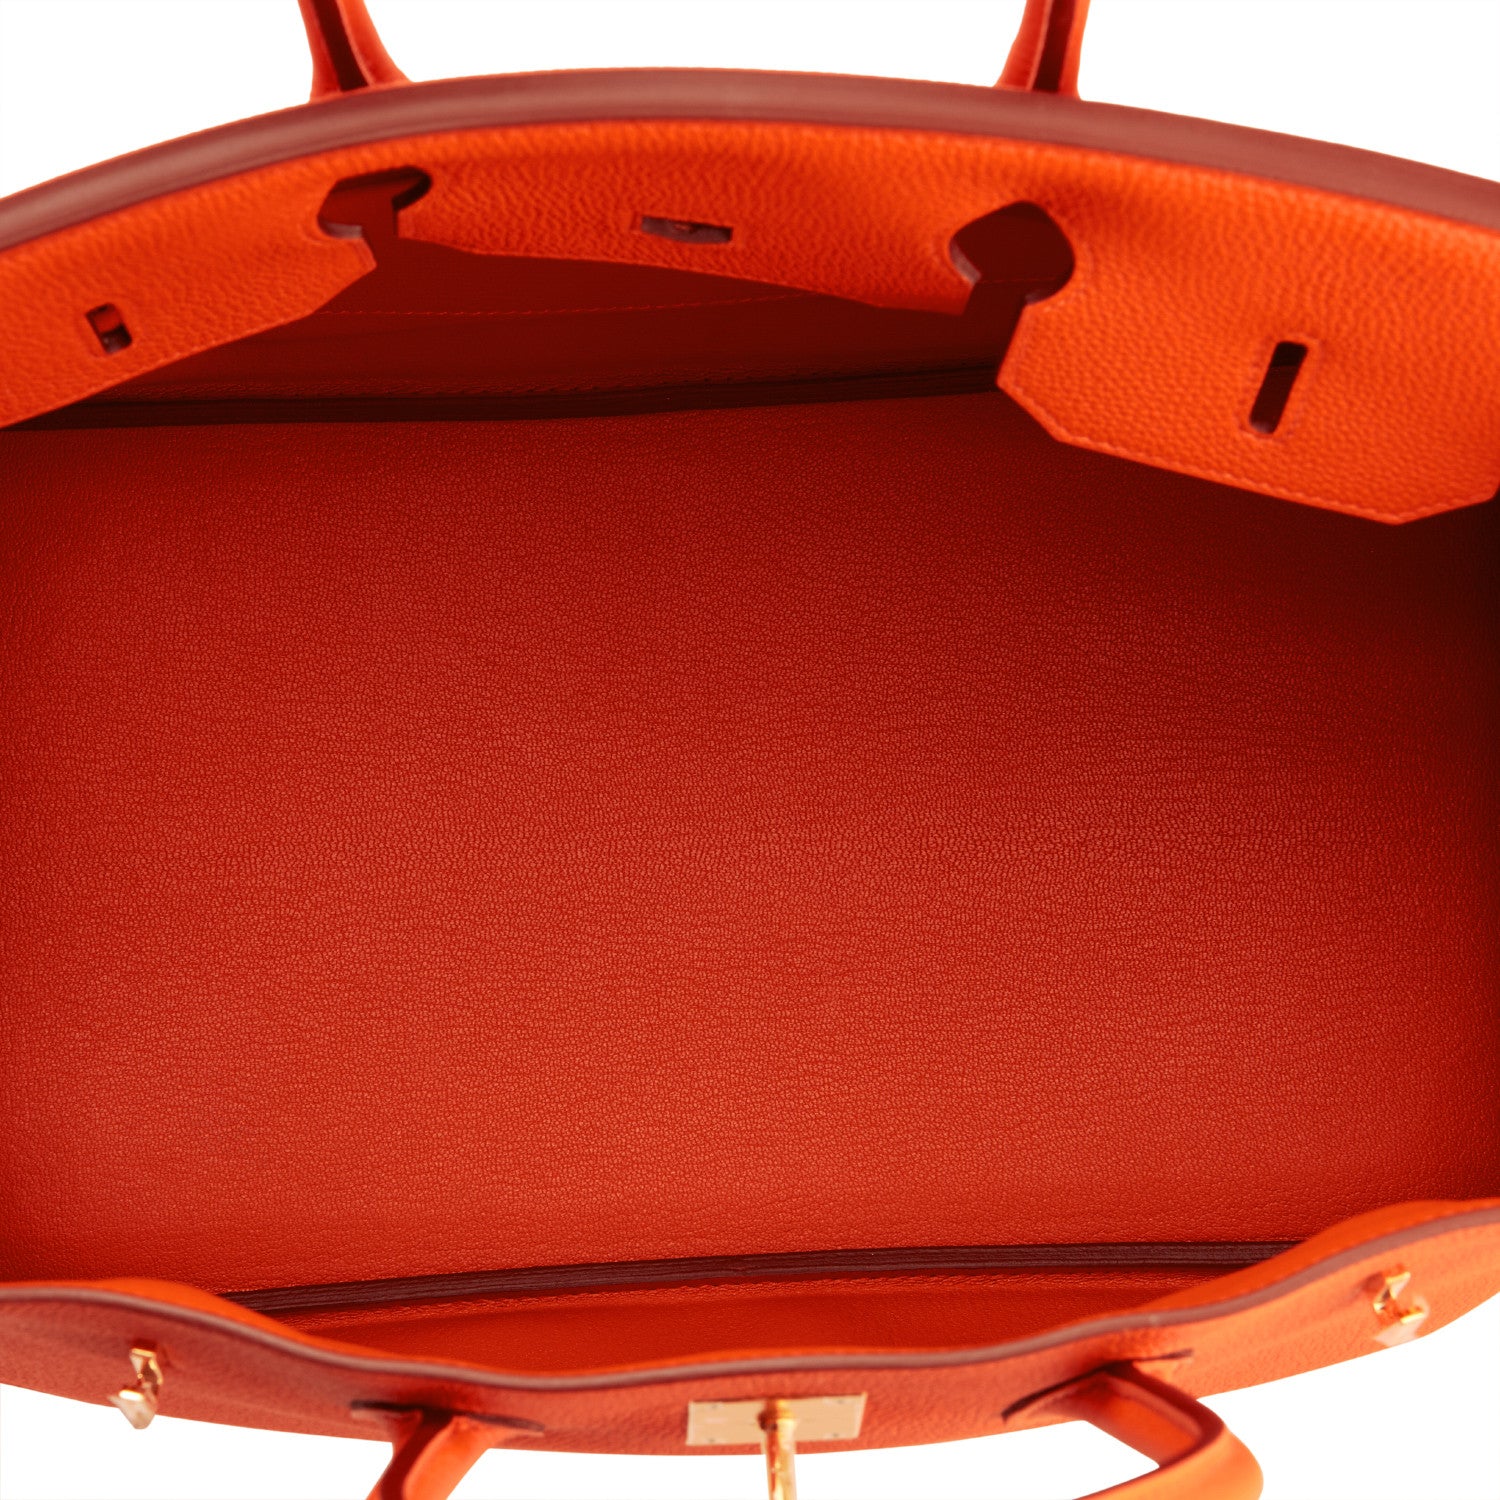 Hermes Birkin Bag 35cm Orange Gold Hardware